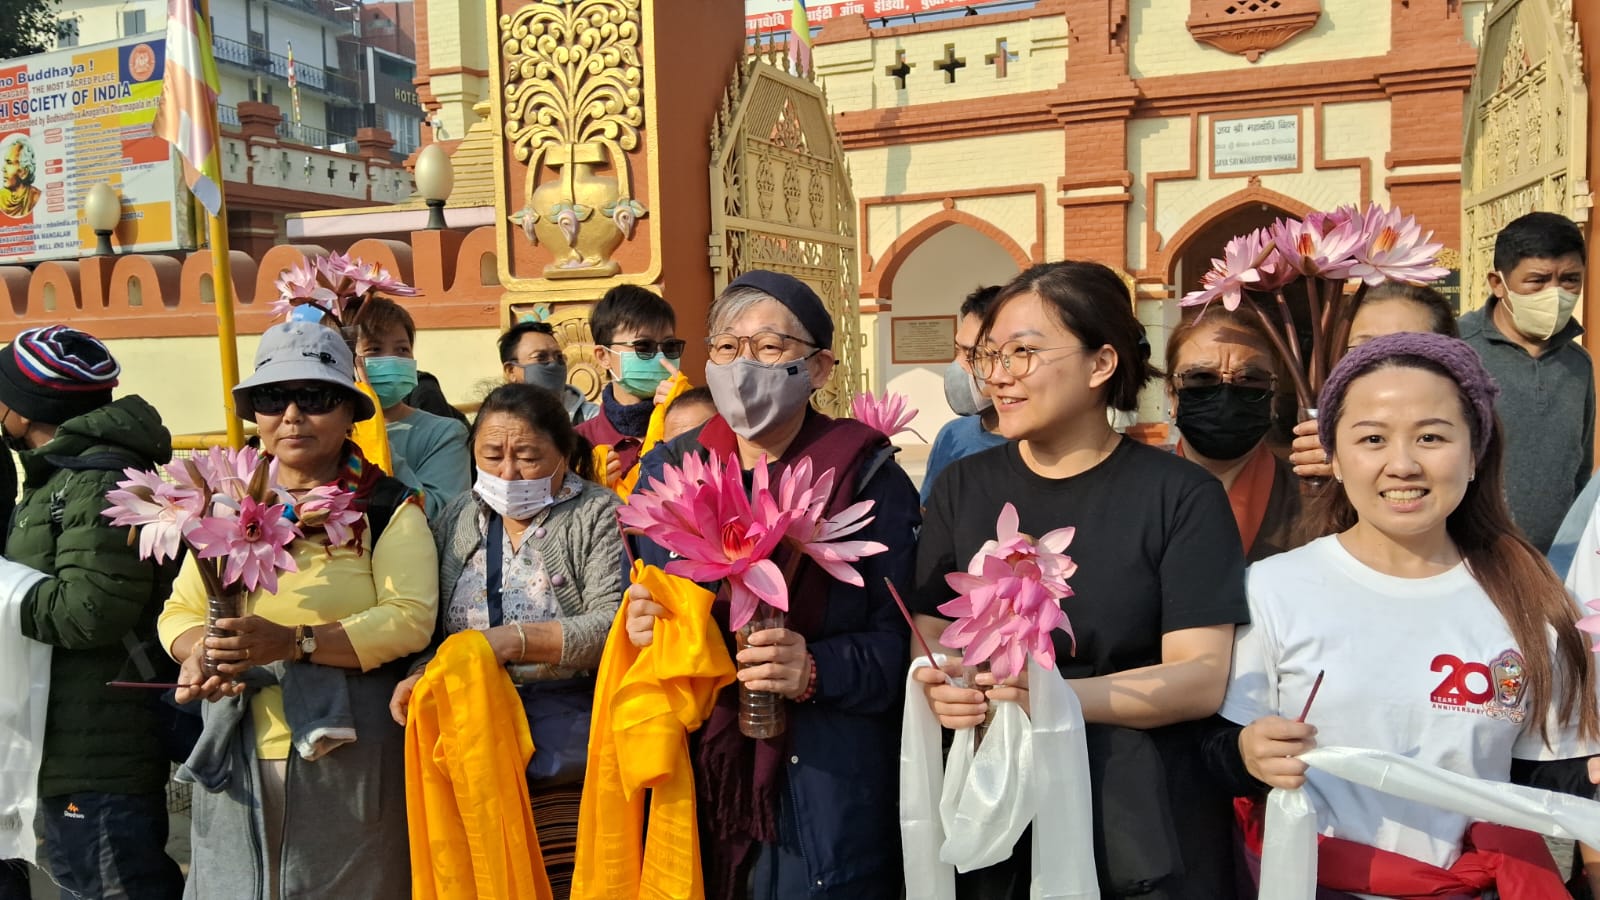 दलाई लामा के दर्शन के लिए उमड़ी भीड़